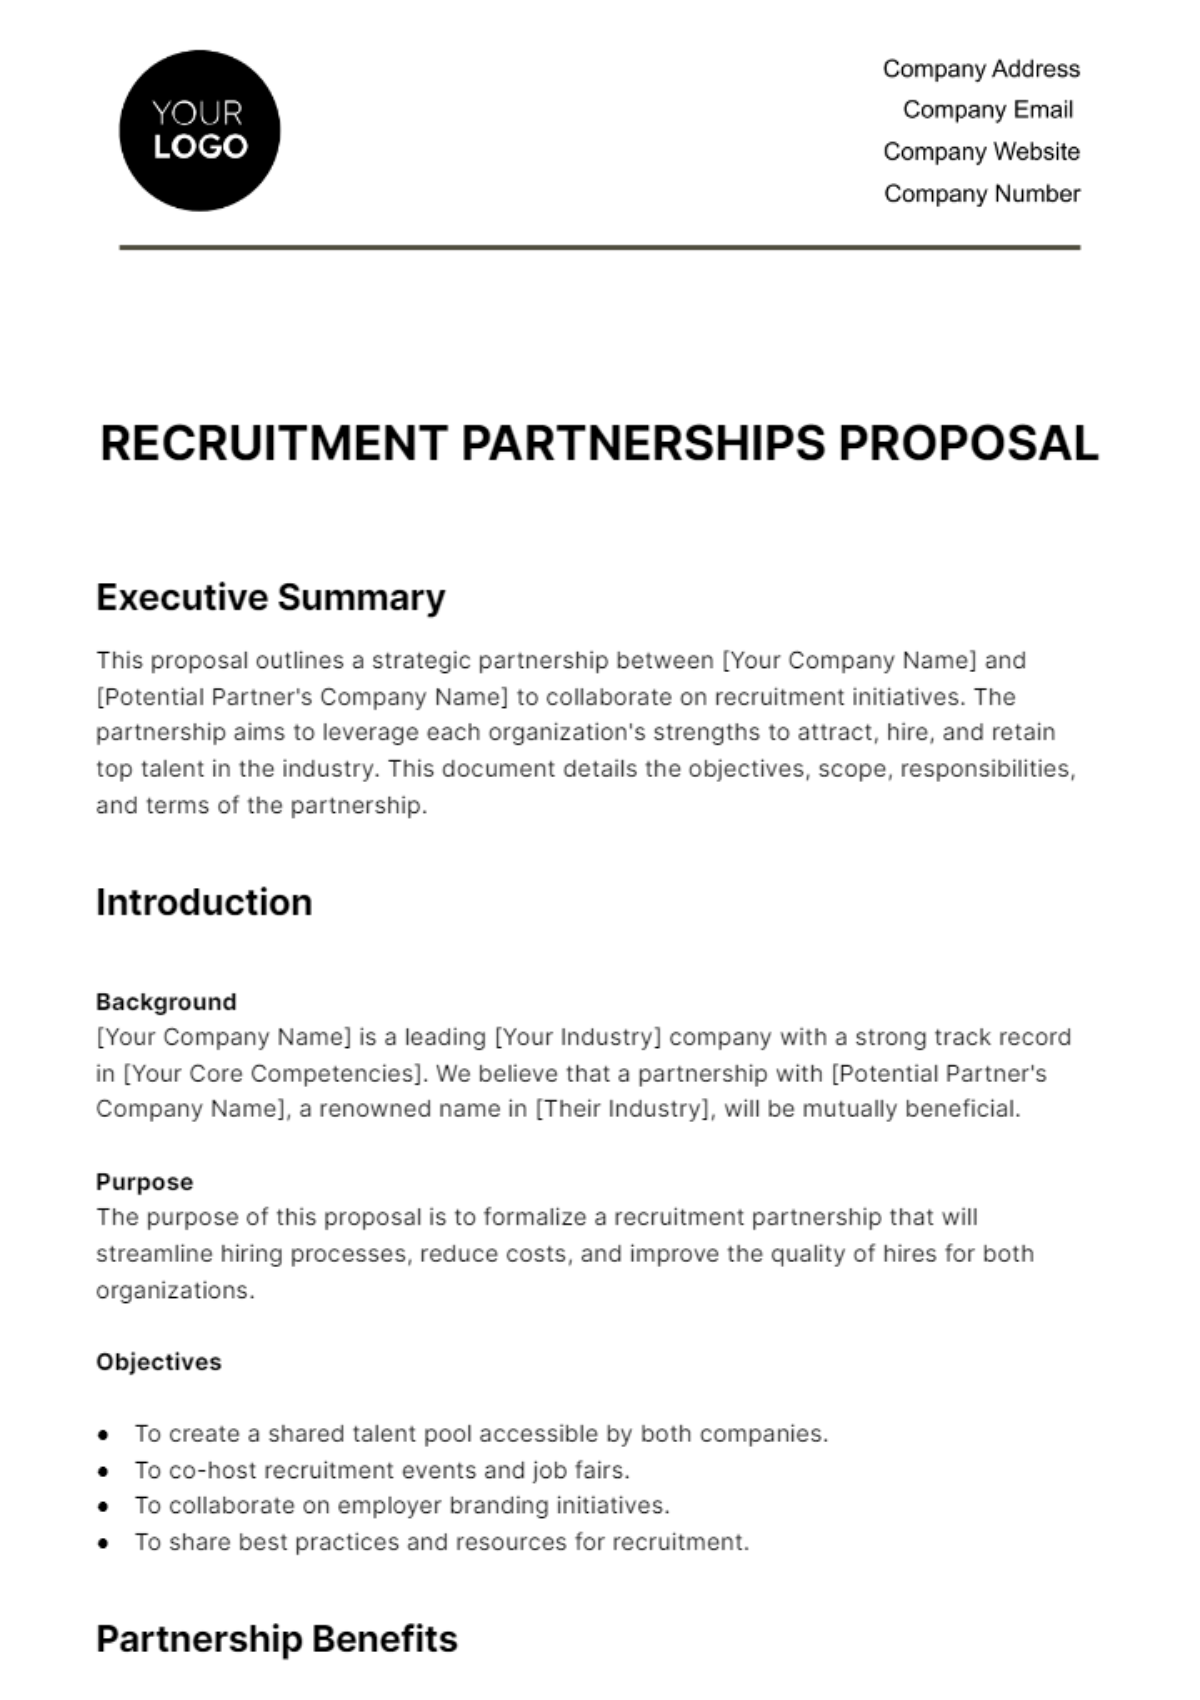 Free Recruitment Partnerships Proposal HR Template